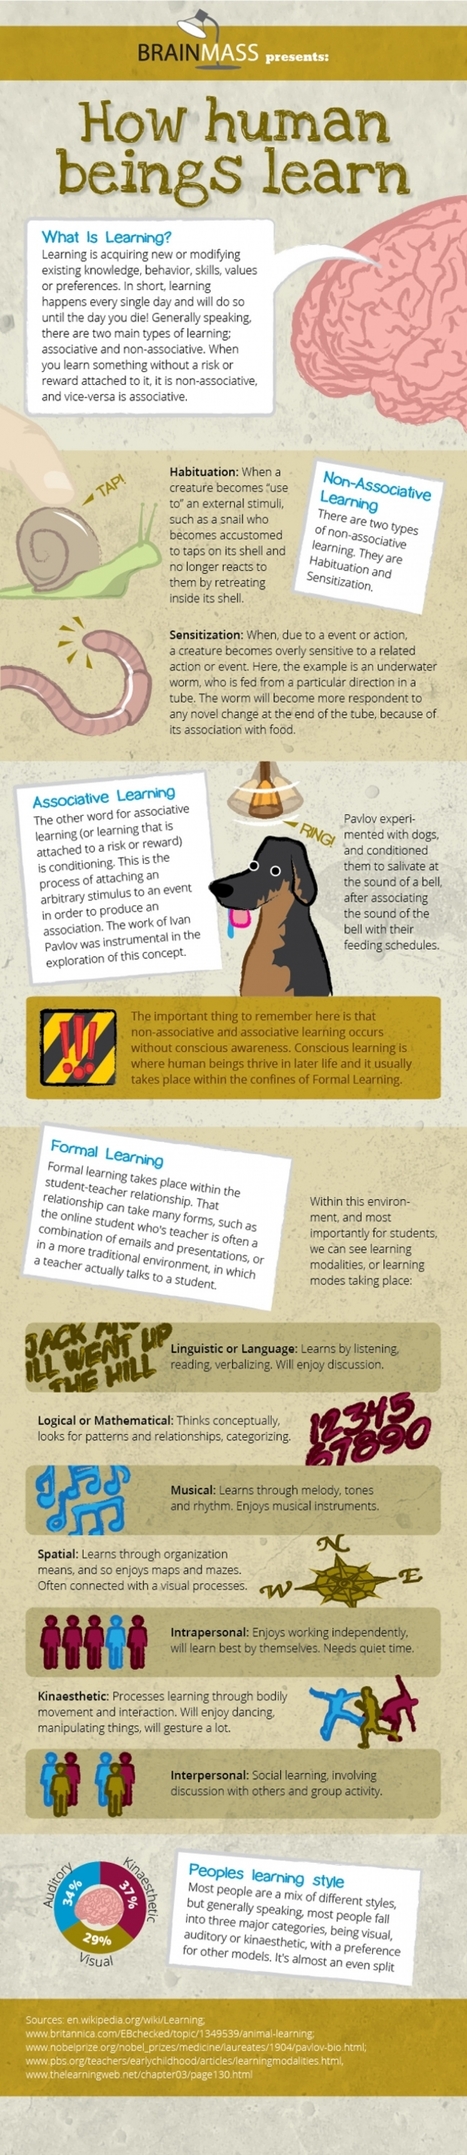 [Infografía] How human beings learn | Edumorfosis.it | Scoop.it